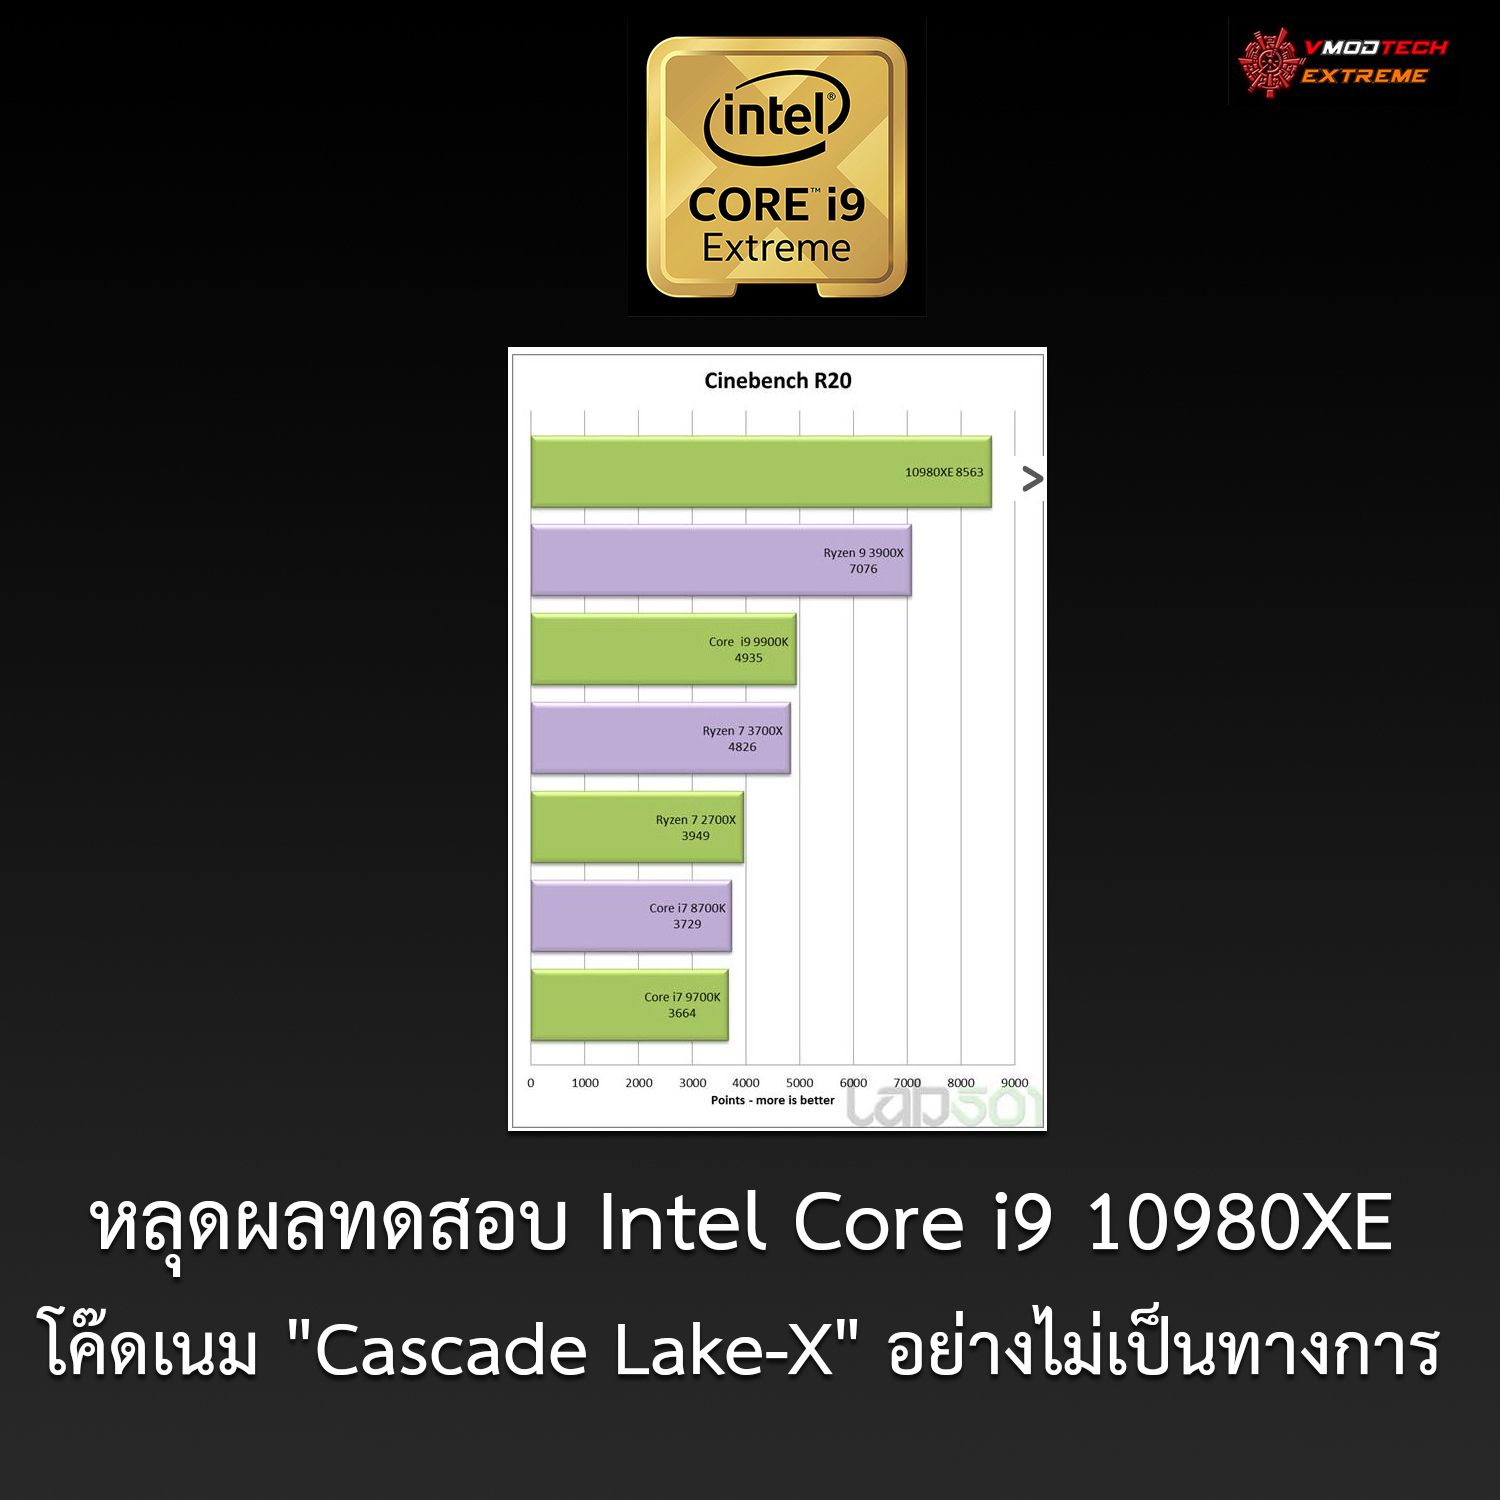 intel core x series benchmark หลุดผลทดสอบ Intel Core i9 10980XE โค๊ดเนม Cascade Lake X อย่างไม่เป็นทางการ 